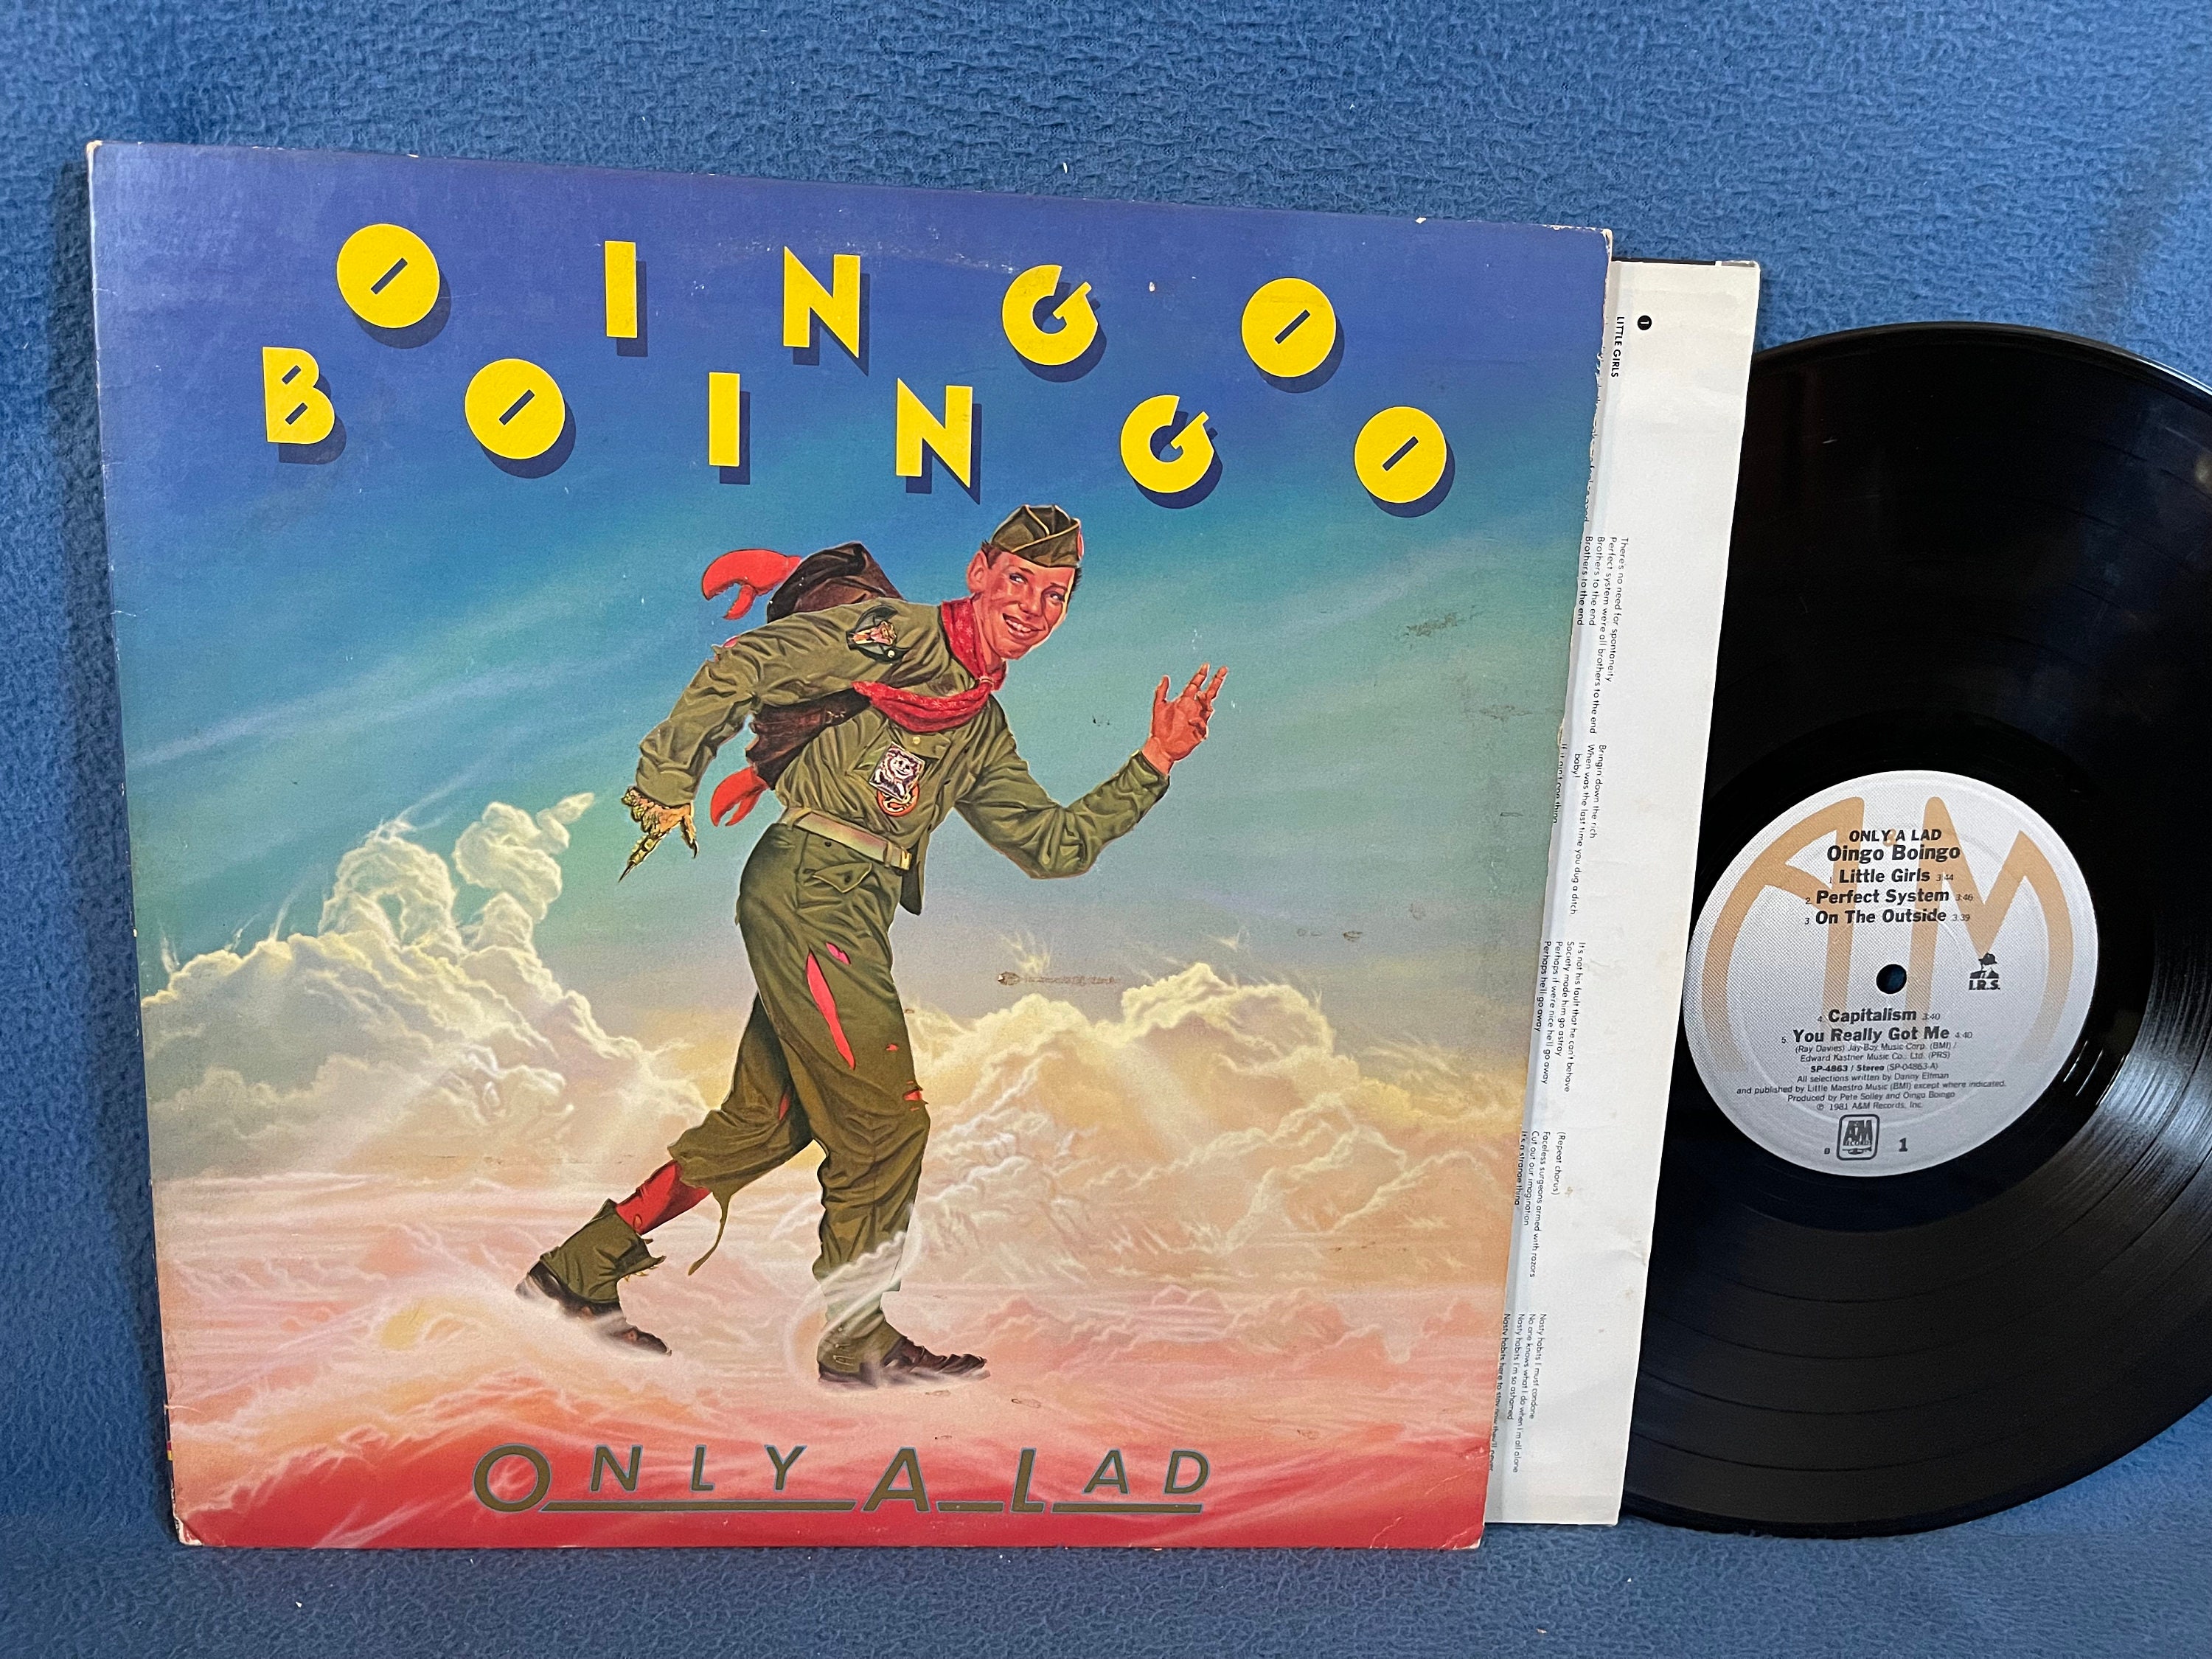 RARE, Vintage, Oingo Boingo s/t Debut Vinyl LP Record Album, Original 1981  First Press, Danny Elfman, New Wave, 80's Dance Music. -  Denmark